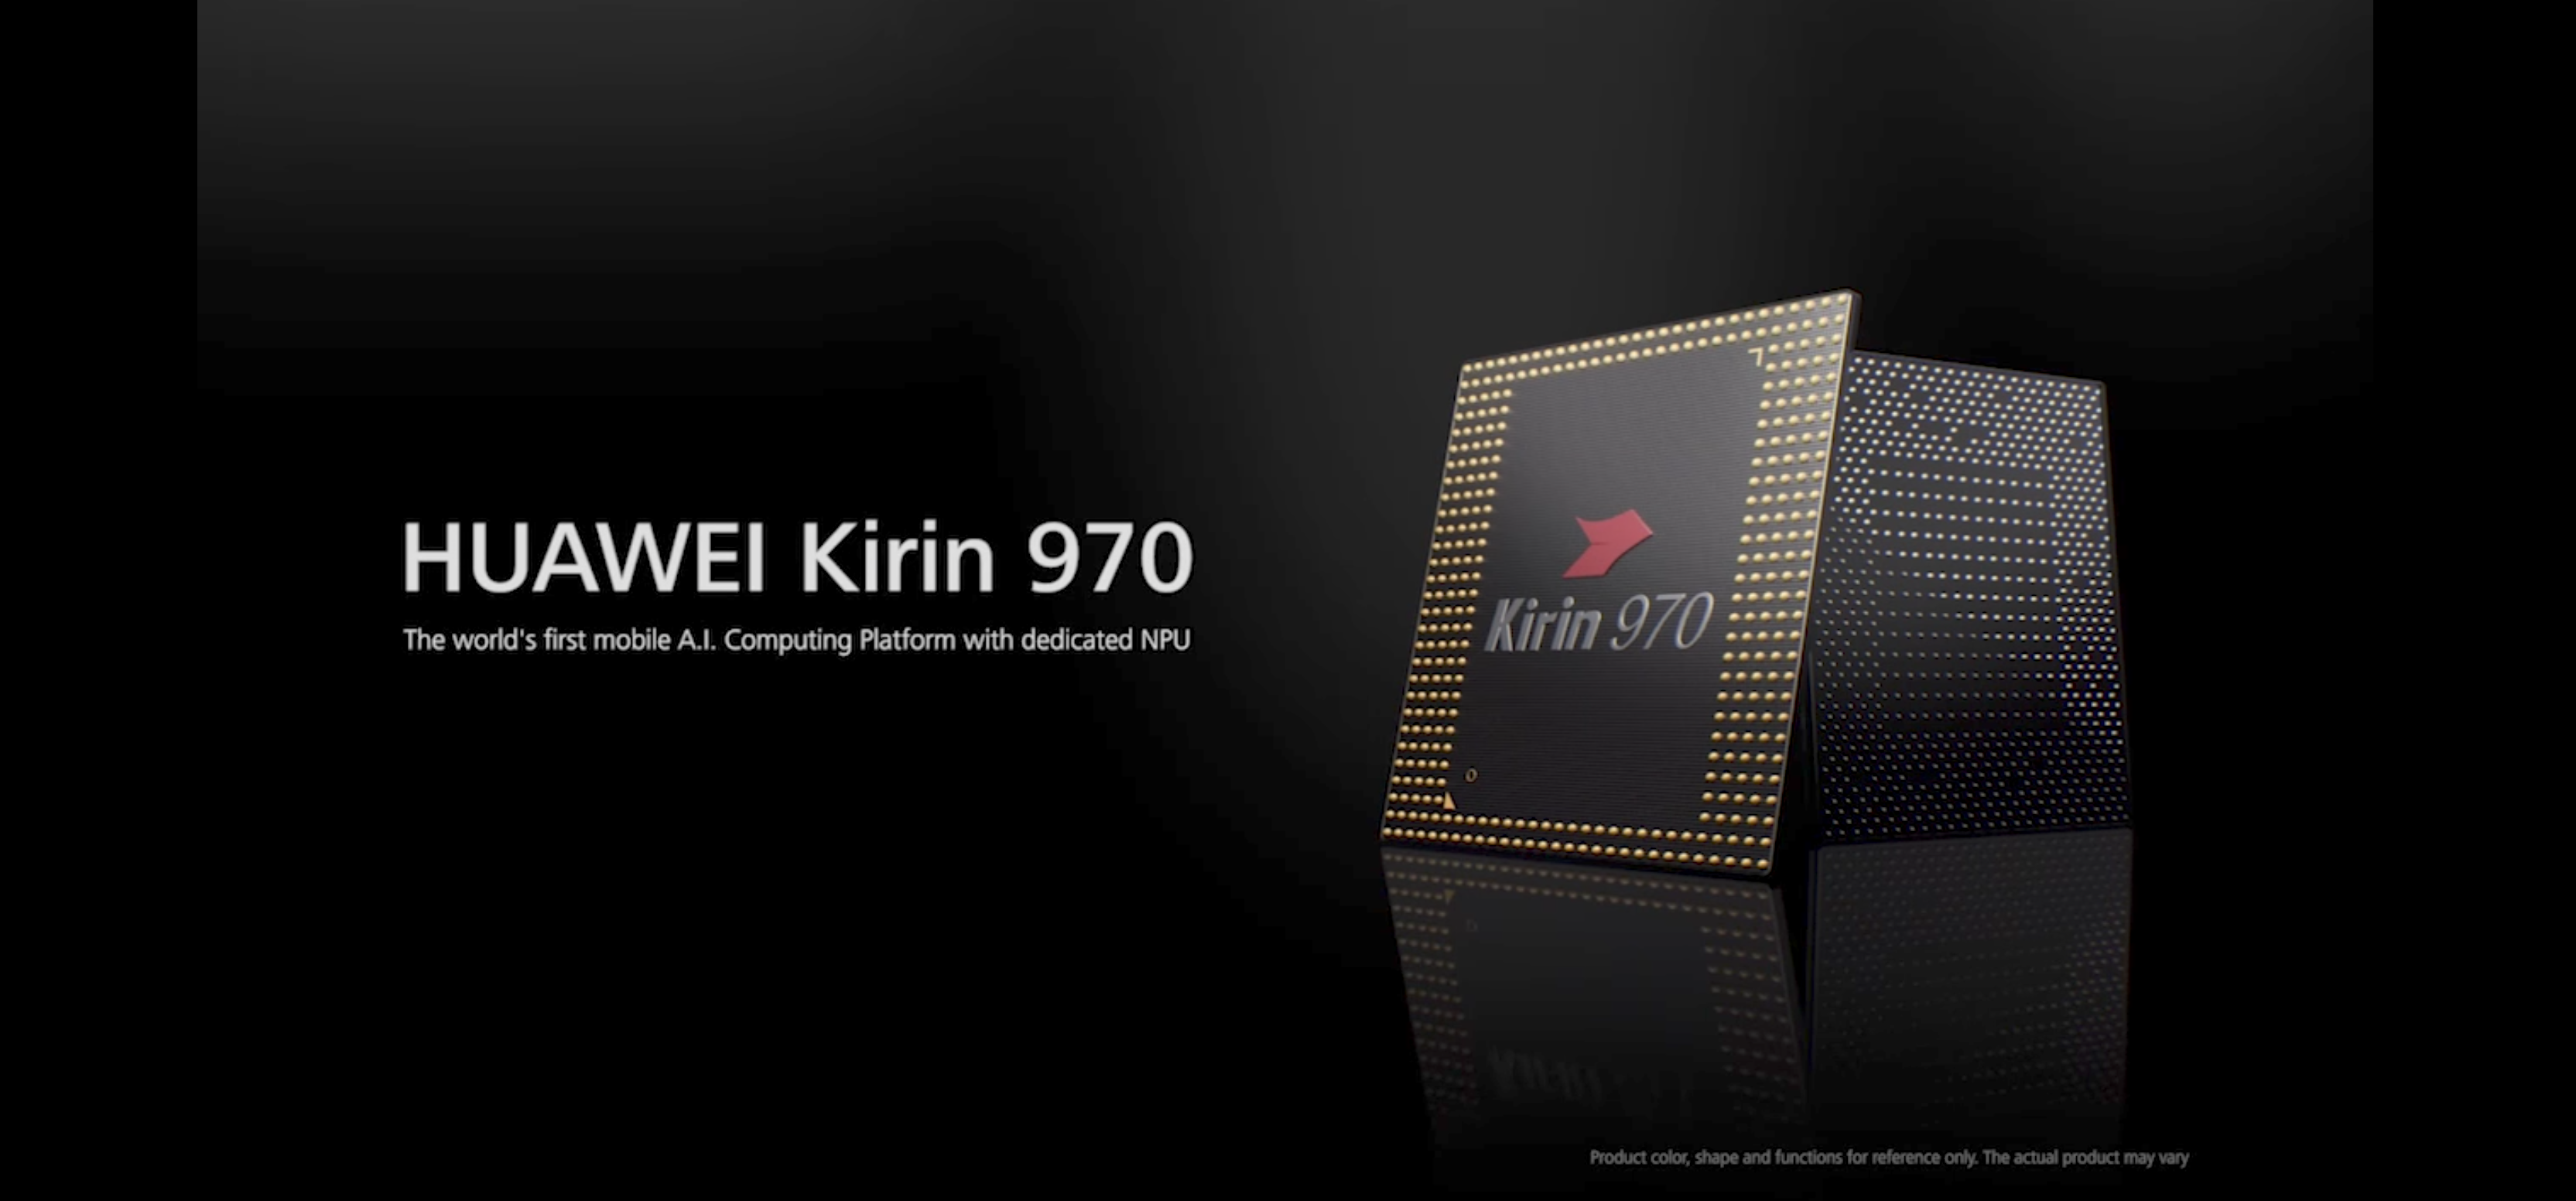 Huawei เปิดตัว Kirin 970 ชิพเซ็ตรุ่นแรกของโลกที่มี AI ช่วยประมวลผล เร็วกว่าโทรศัพท์ทั่วไปถึง 25 เท่า